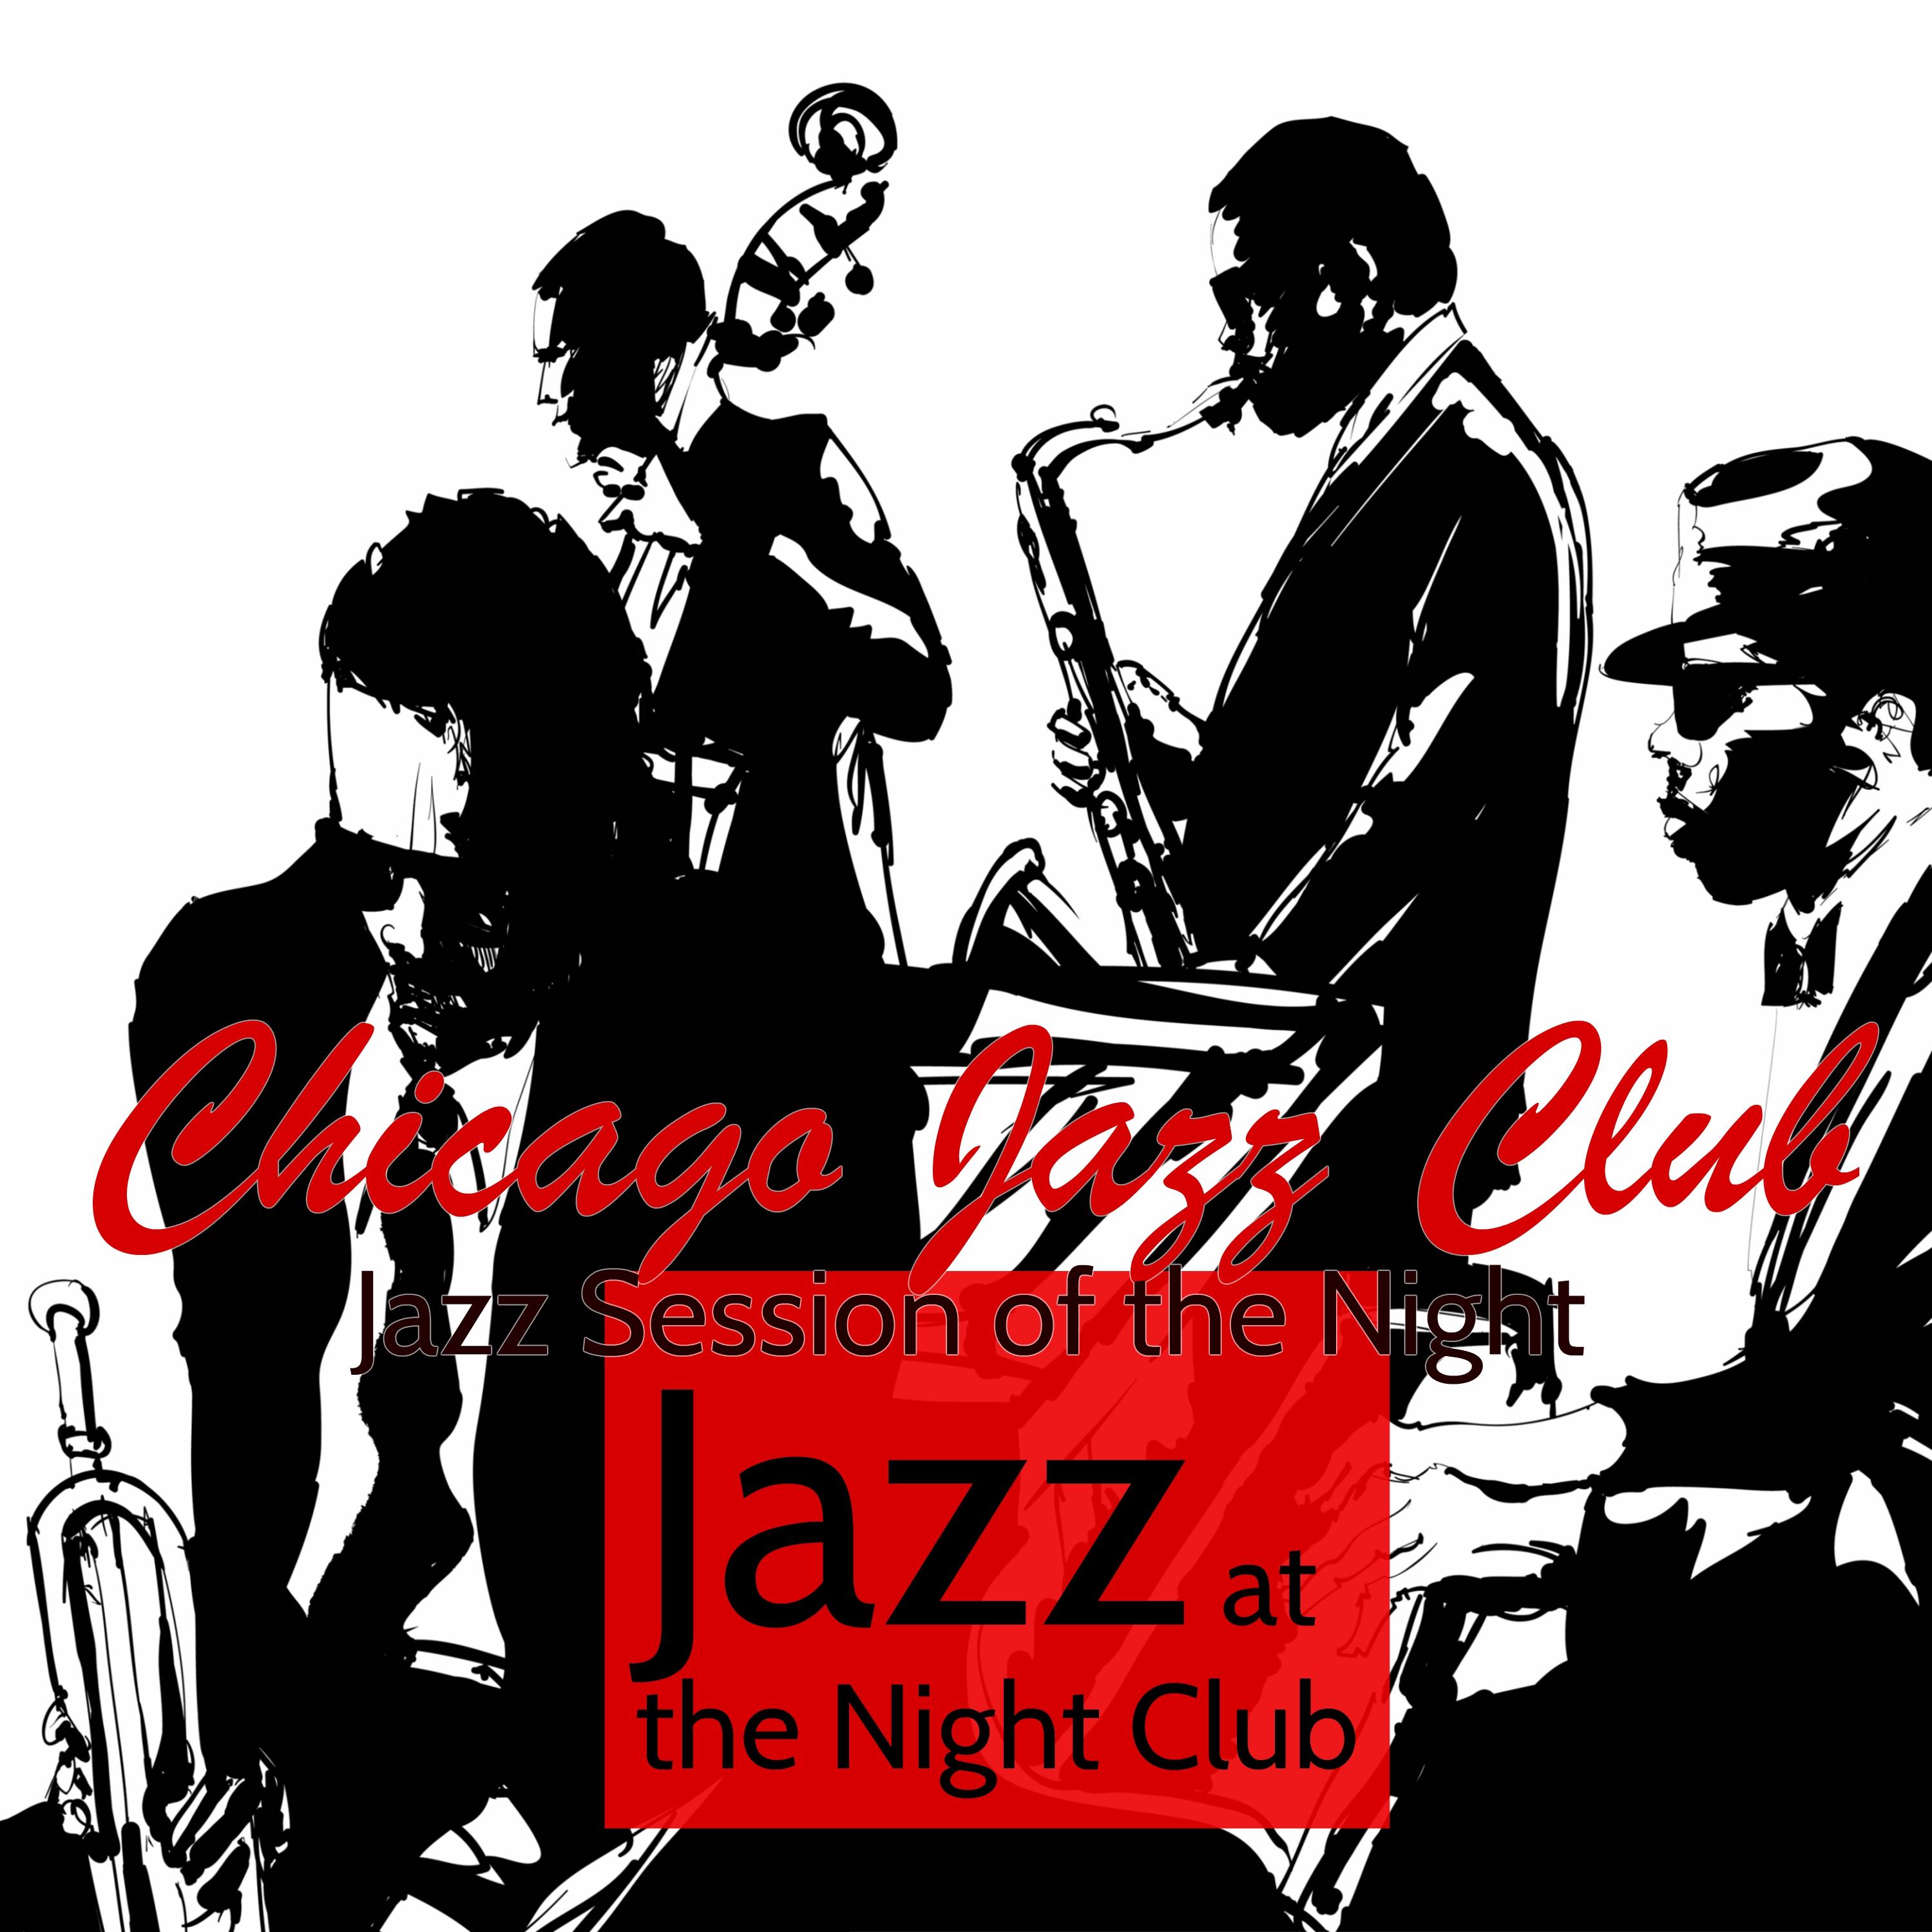 Jazz at the Night Club  Chicago Jazz Club Jazz Session of the Night